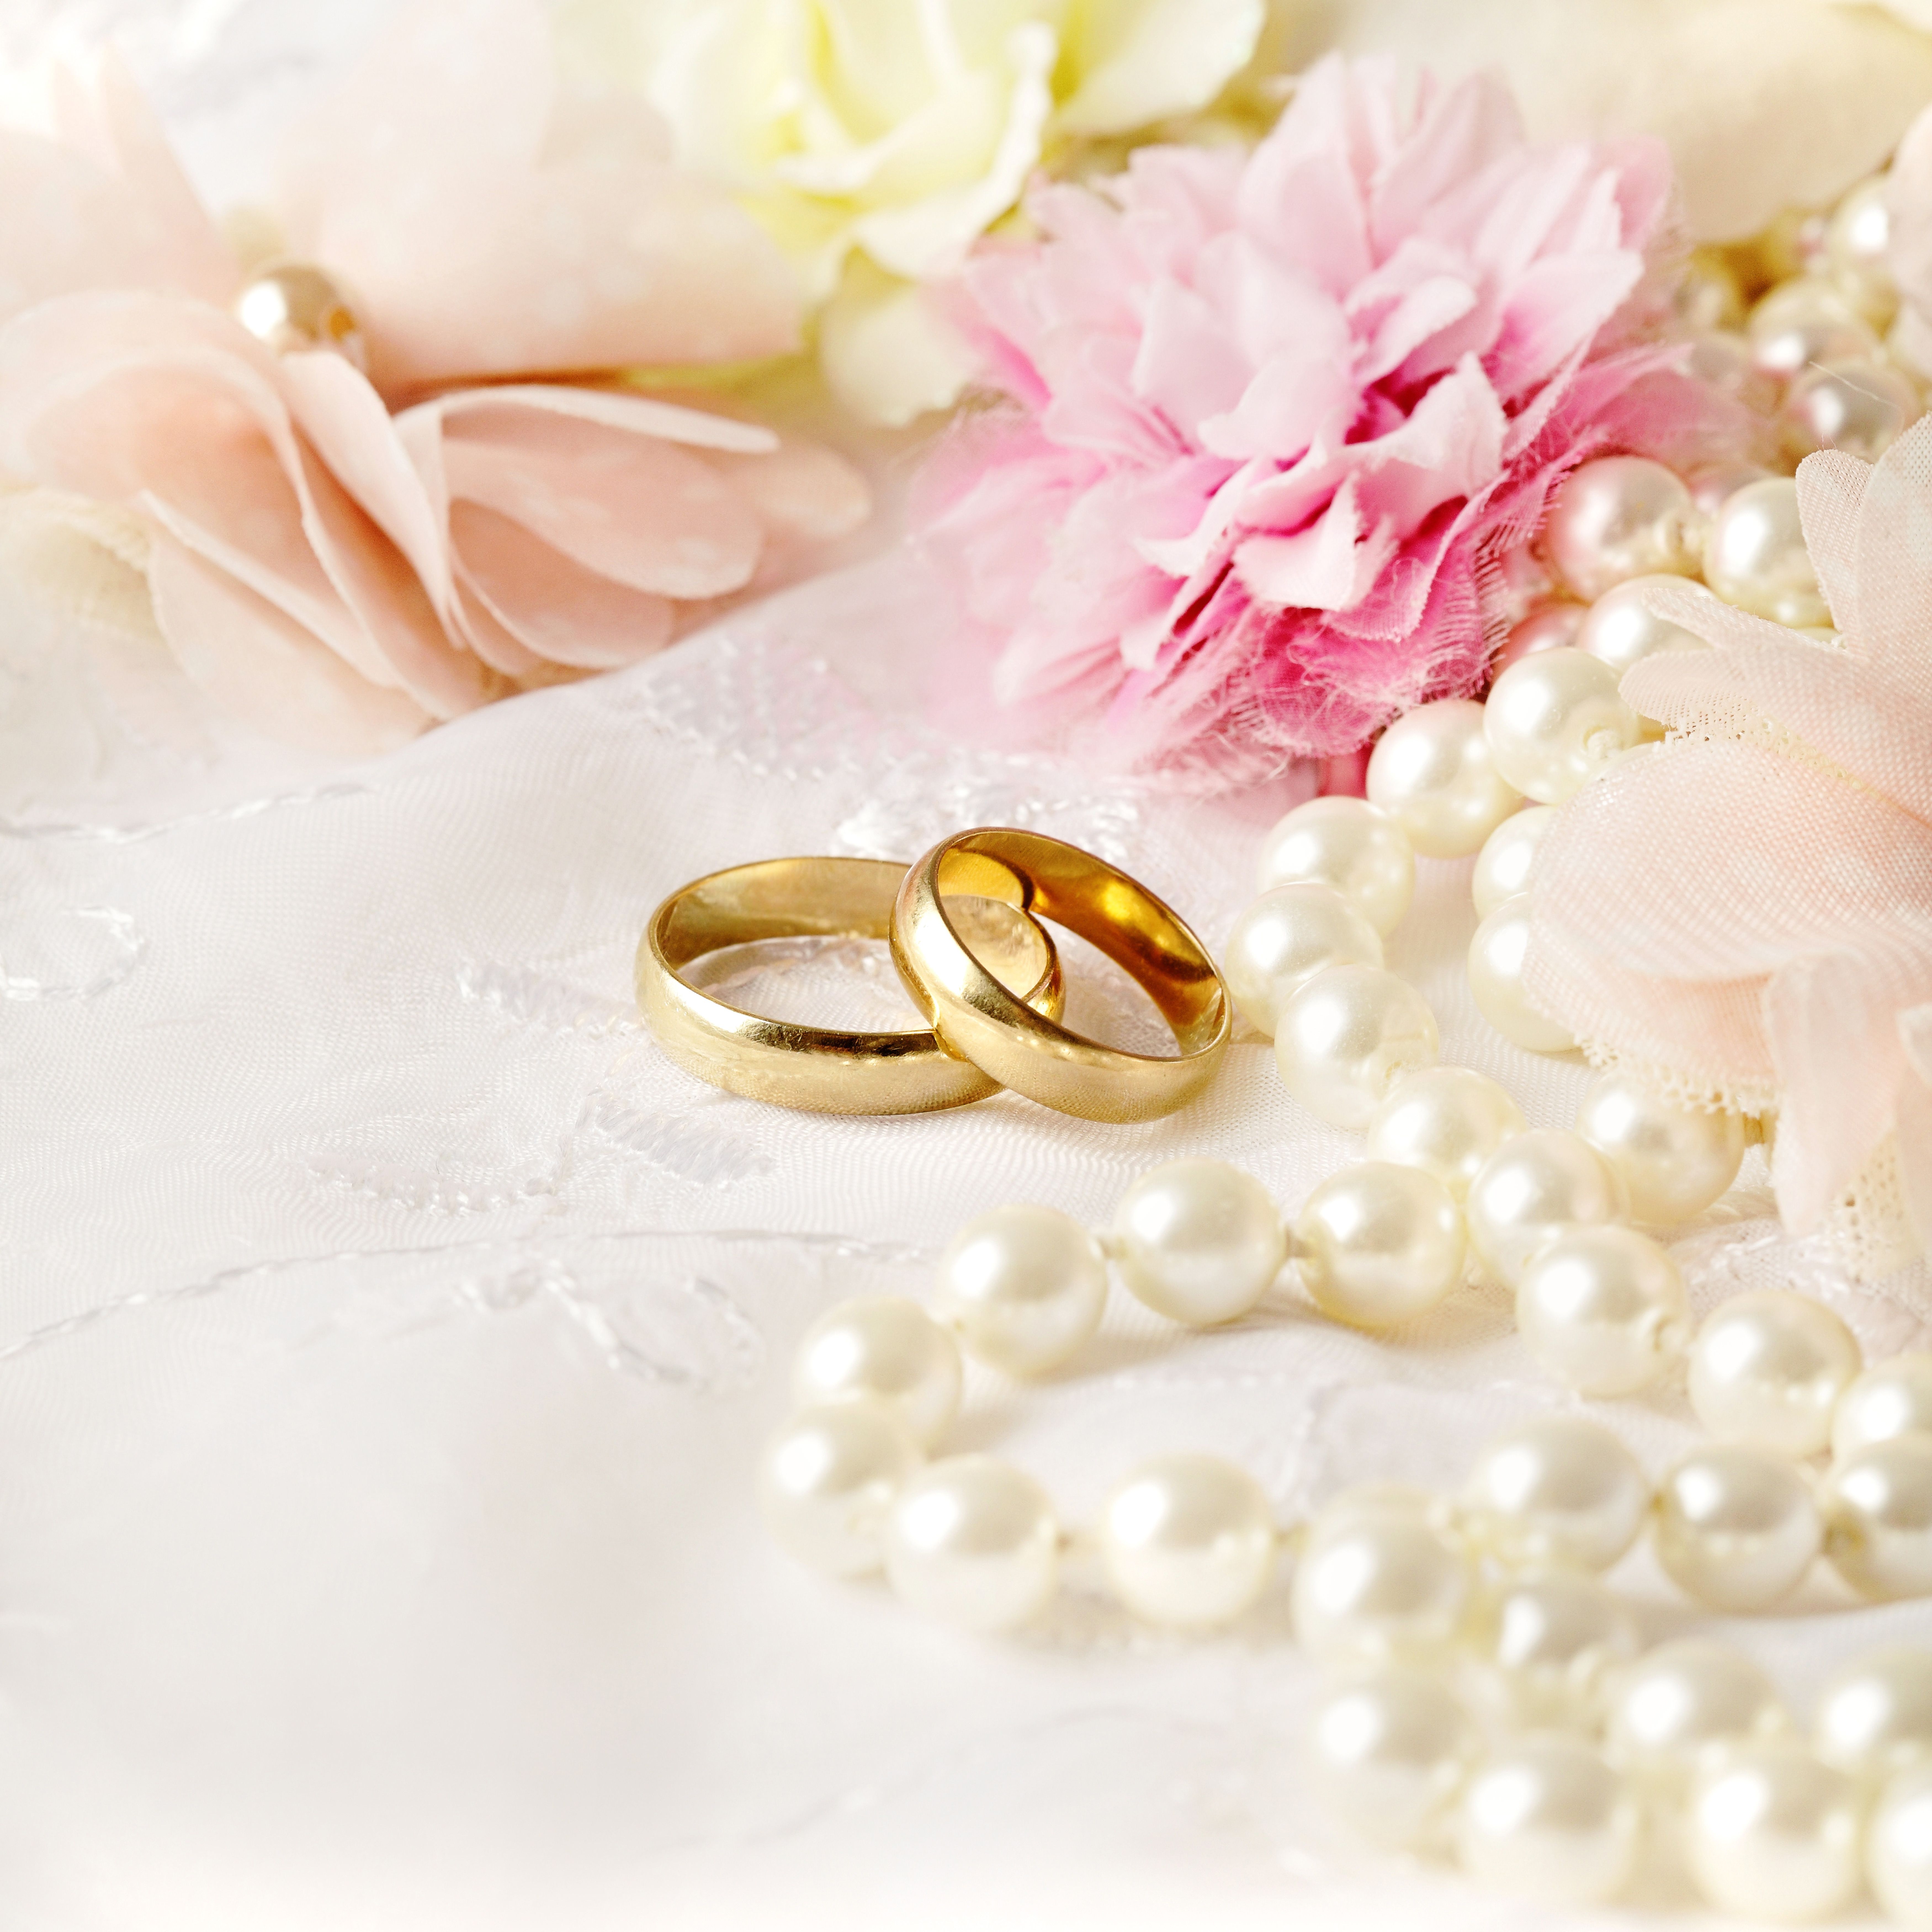 hochzeit wallpaper,wedding ceremony supply,pink,wedding ring,body jewelry,fashion accessory